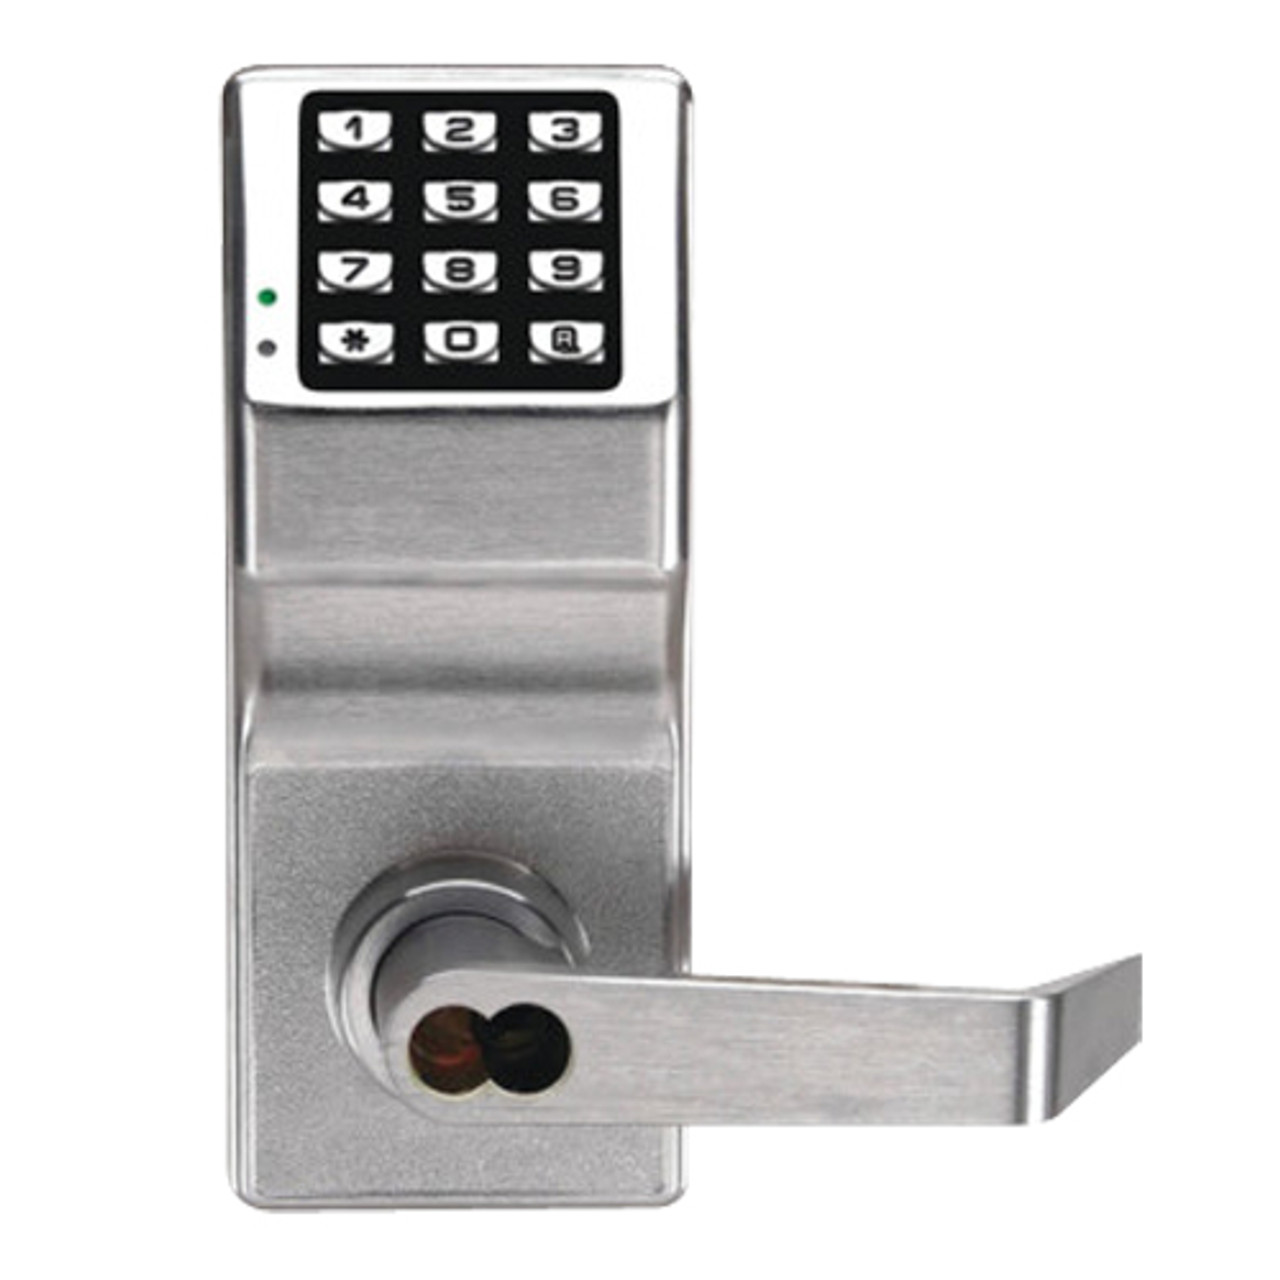 DL2700WPIC-US26D Alarm Lock Trilogy Electronic Digital Lock in Satin Chrome Finish